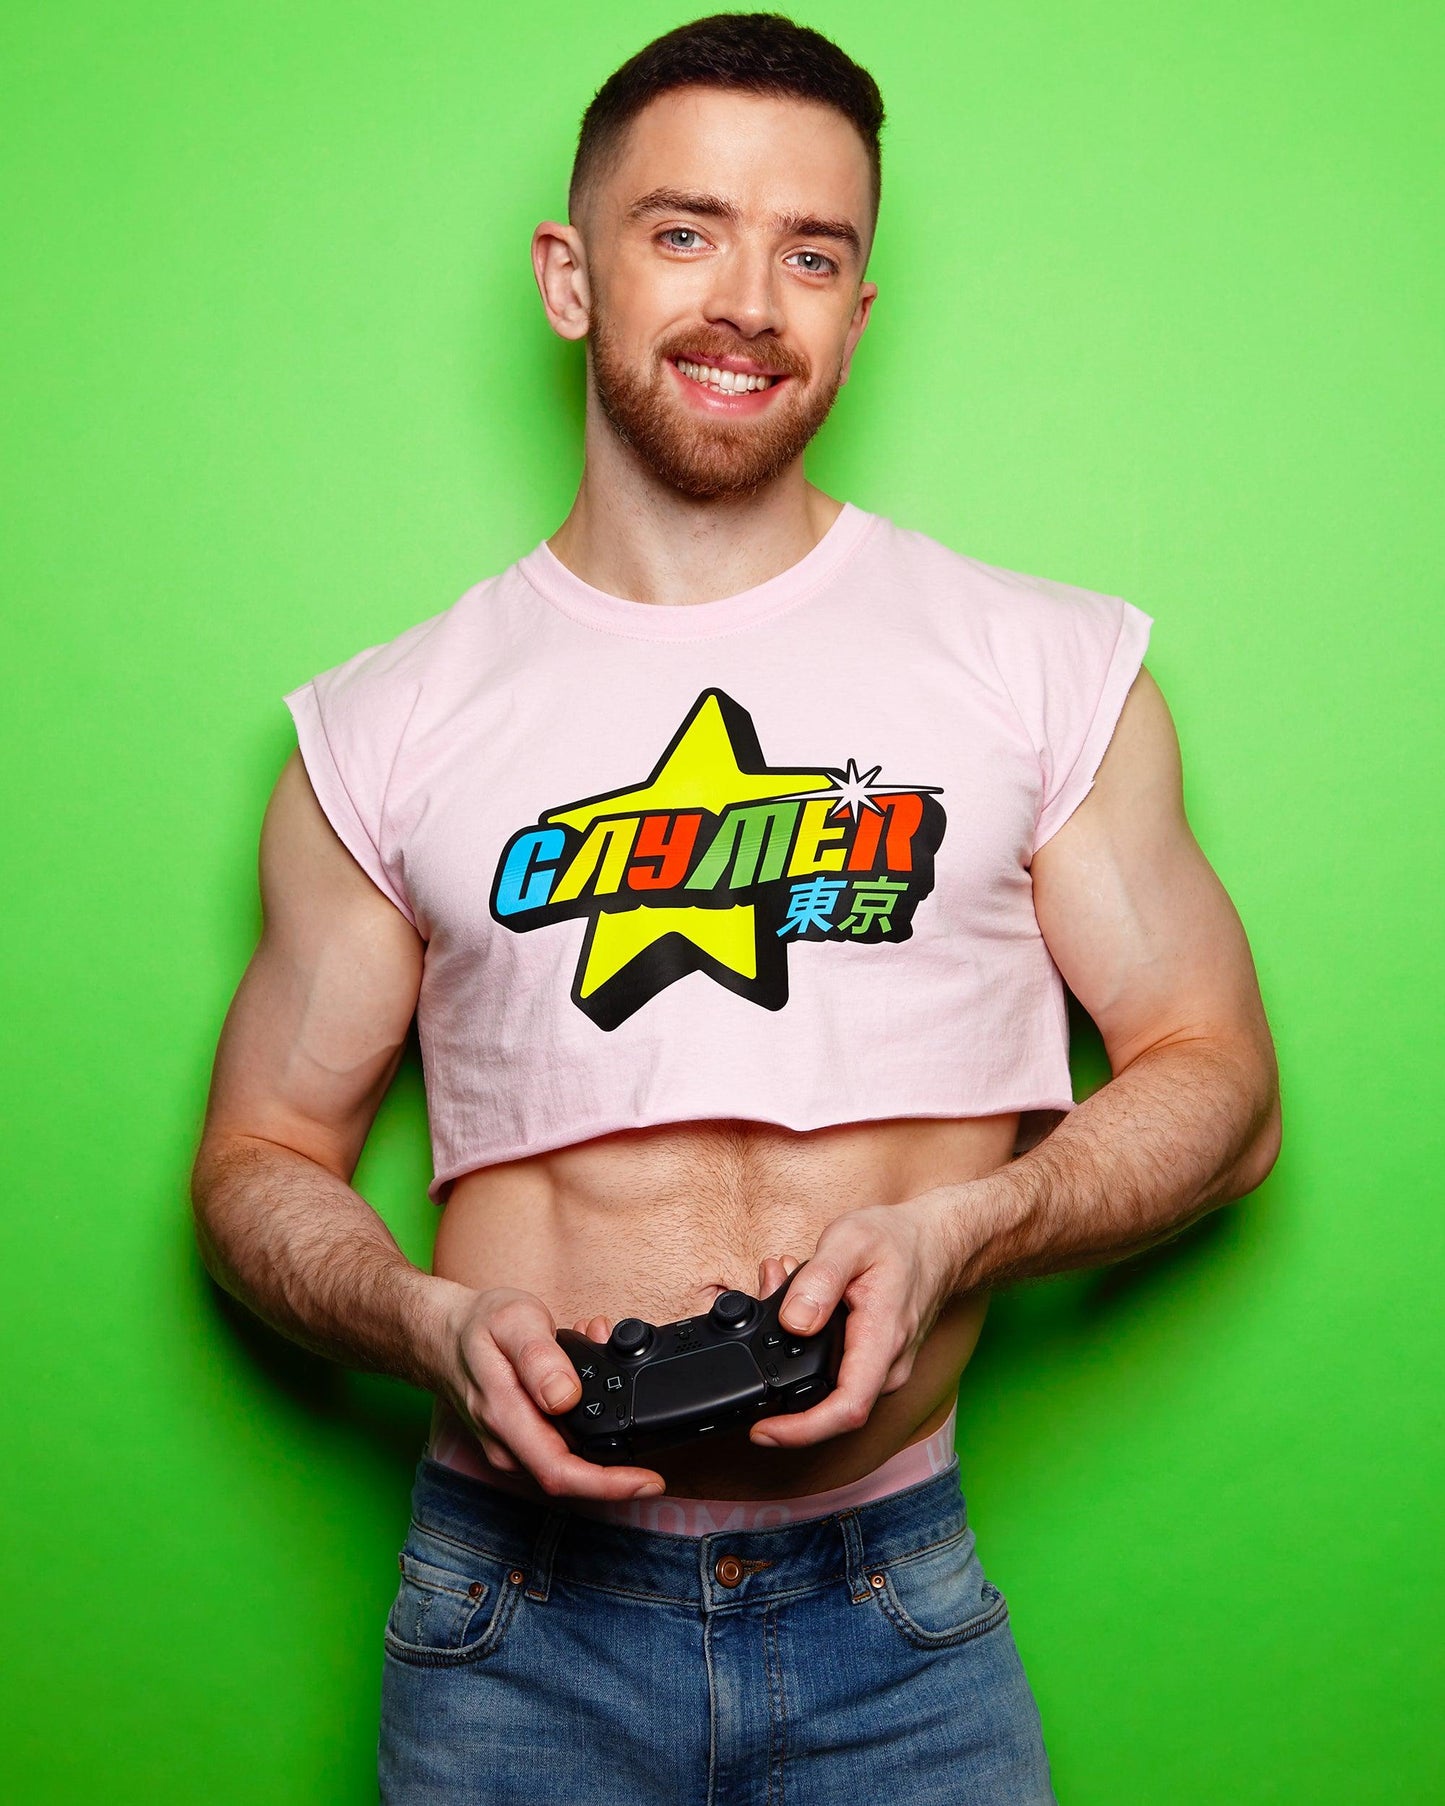 Gaymer on pink - sleeveless crop top.